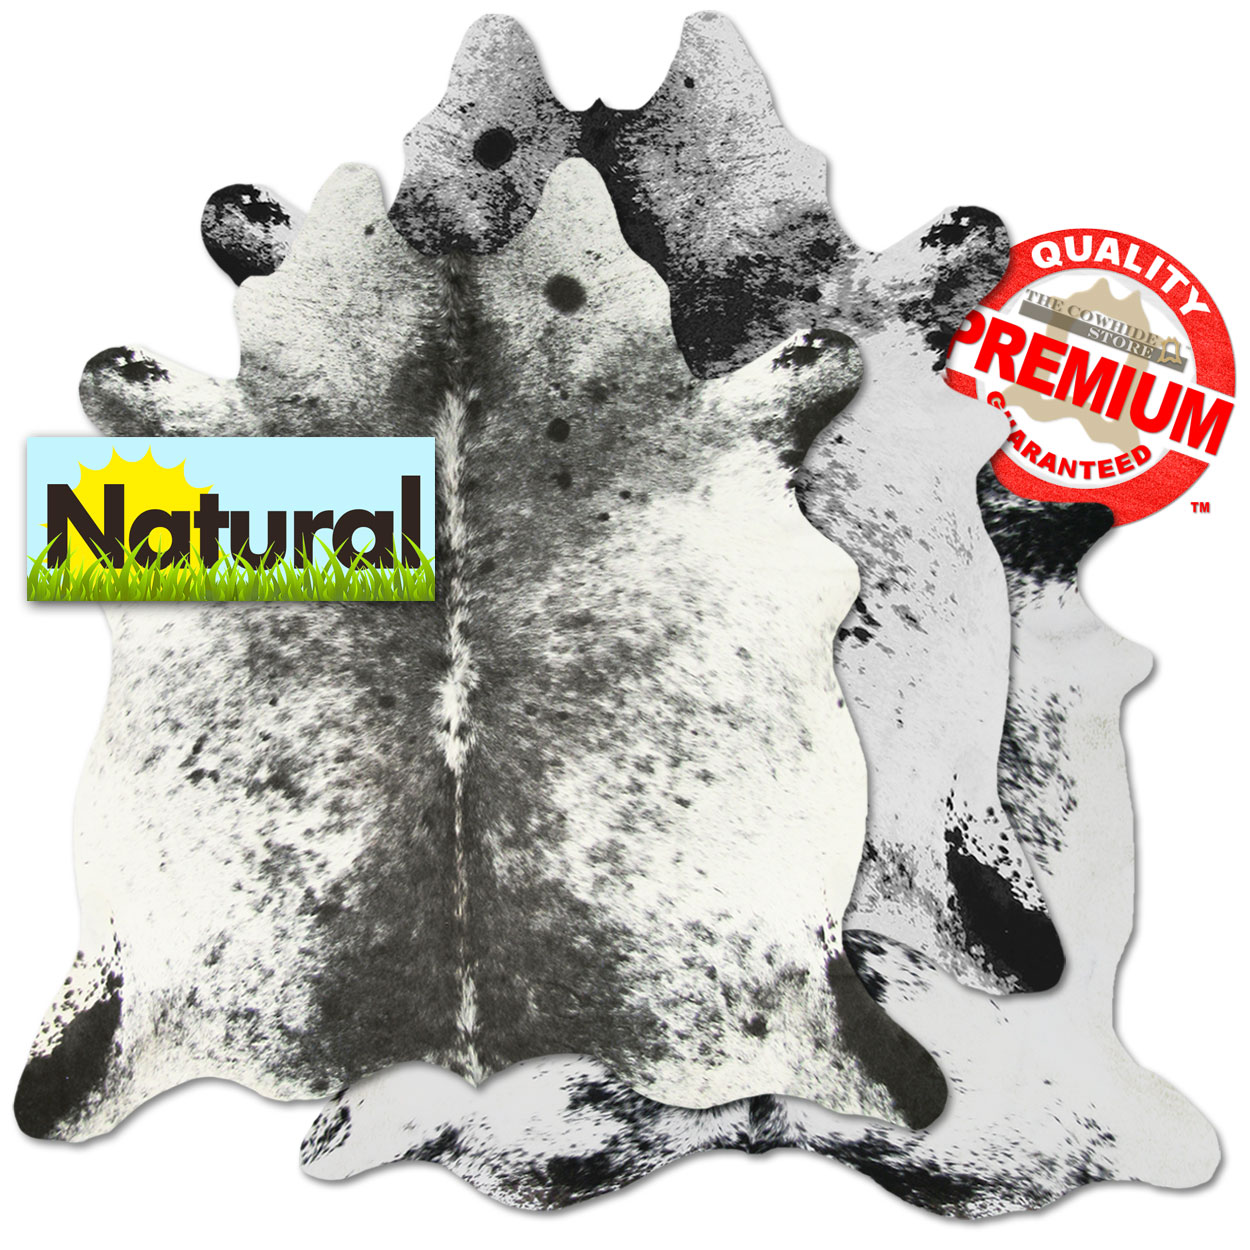 322577 - Premium Grade A Natural Longhorn Black White Cowhide - Choose Size